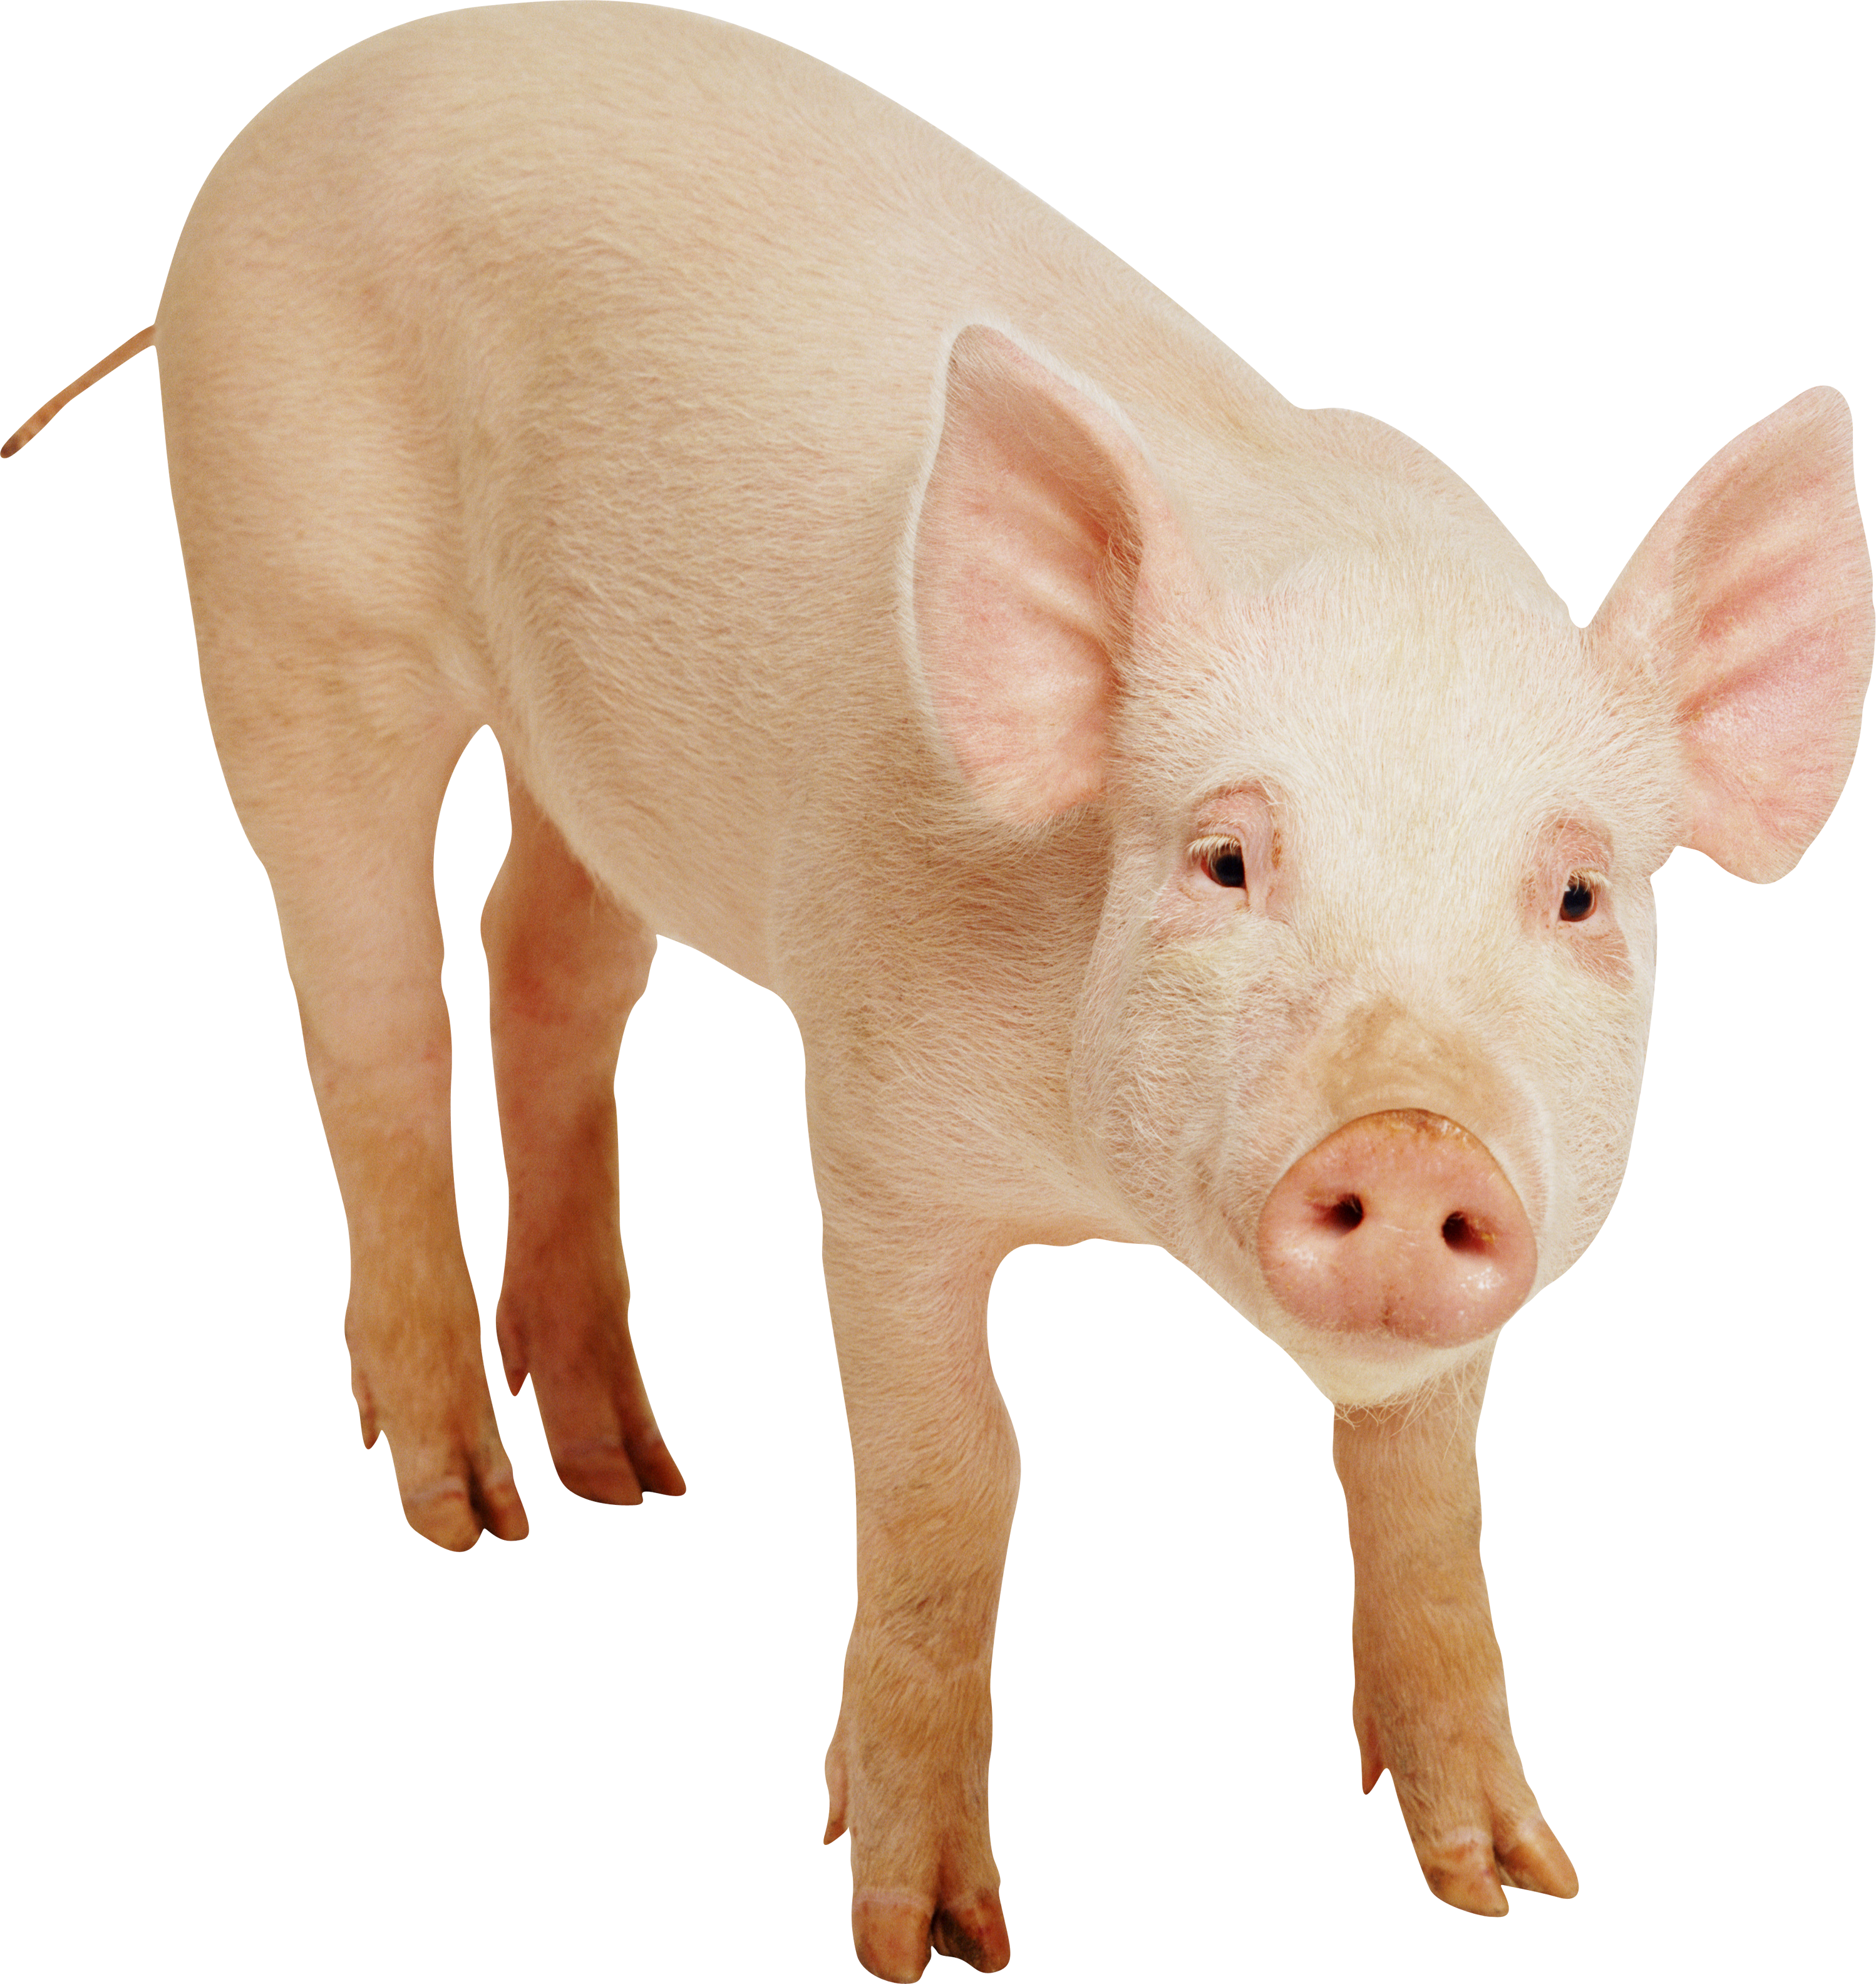 Pig Png Image - Pig Face, Transparent background PNG HD thumbnail